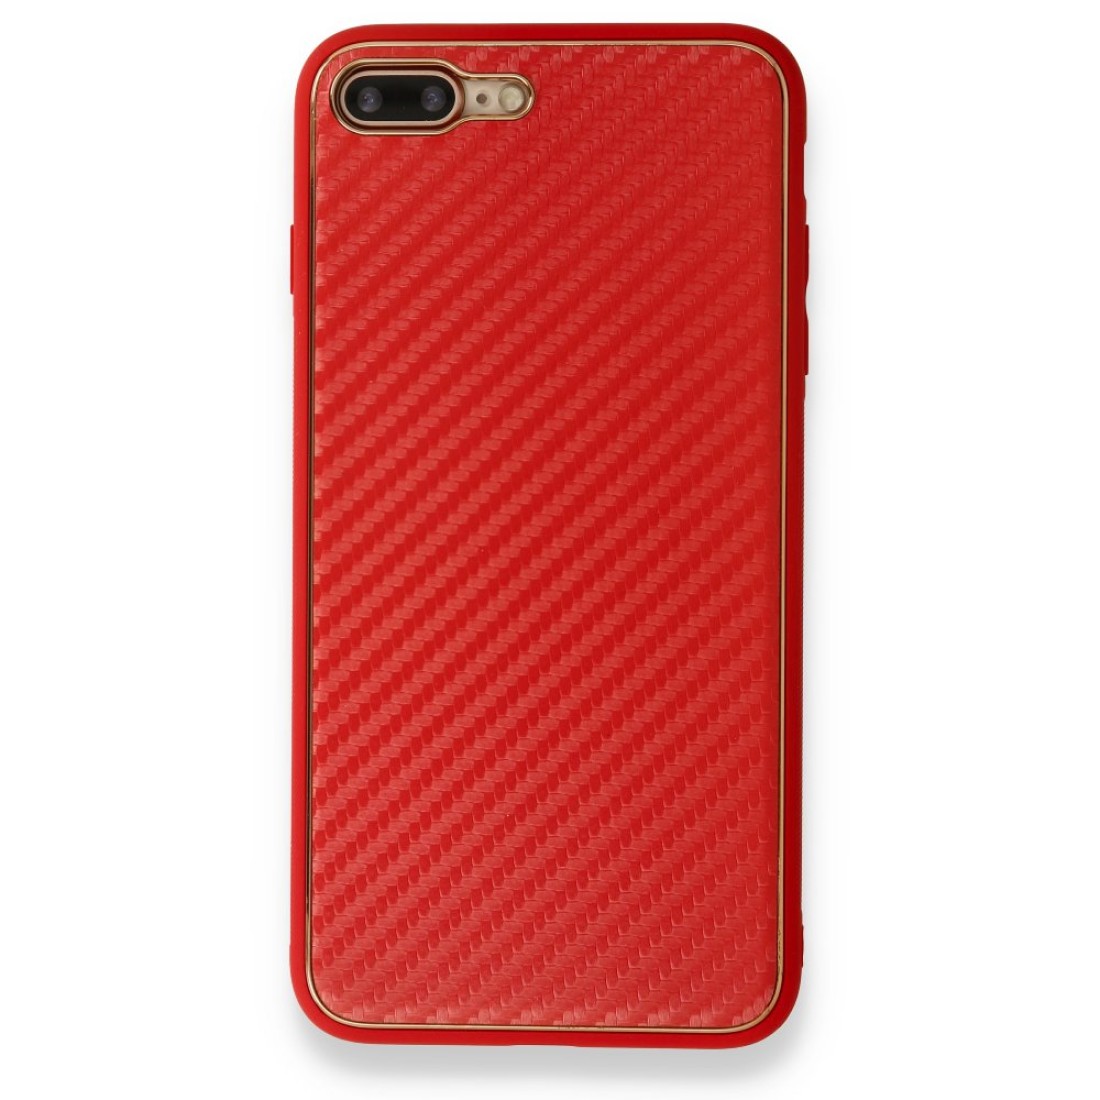 Apple iPhone 7 Plus Kılıf Coco Karbon Silikon - Kırmızı